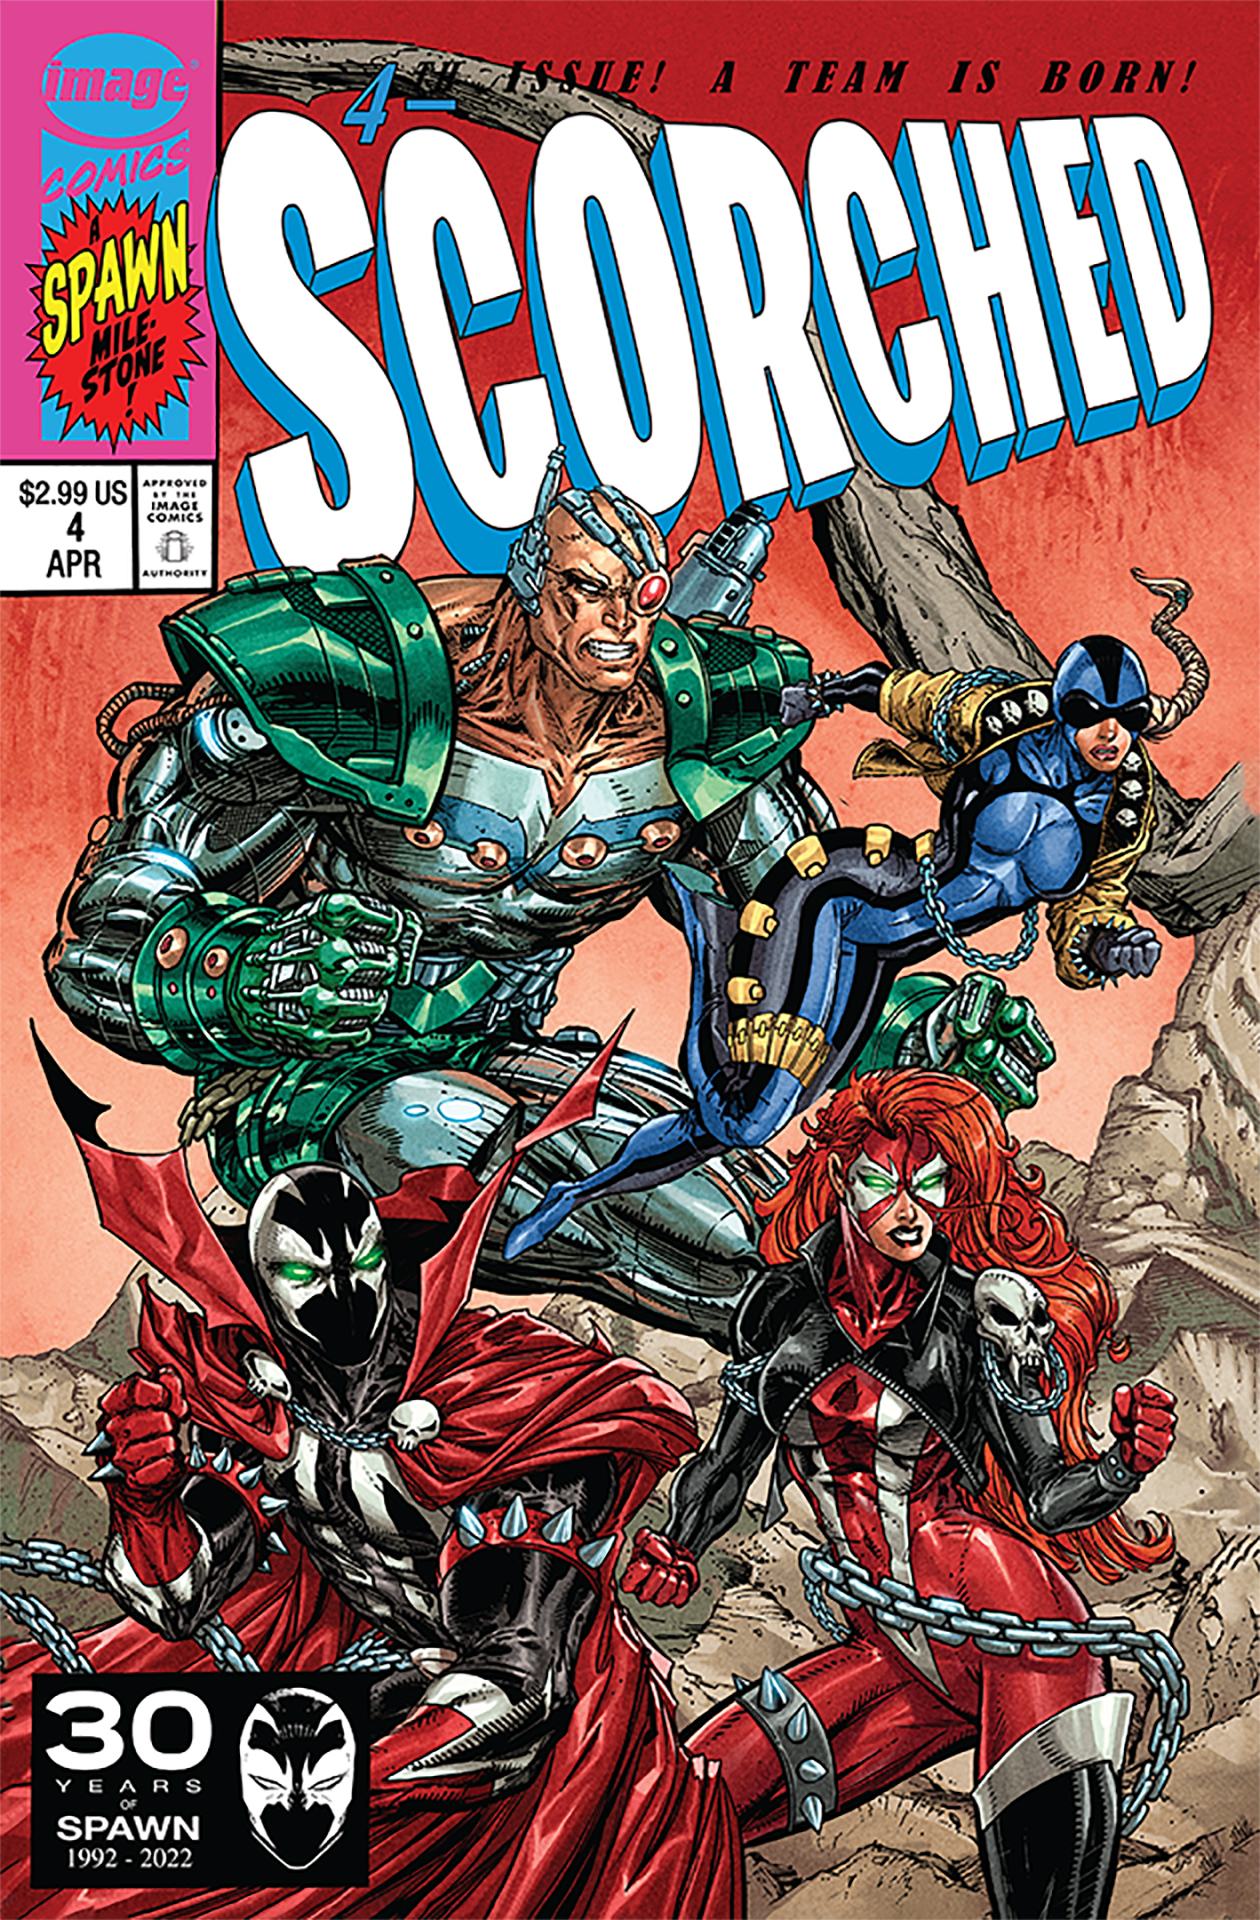 Portadas tributo a Scorched X-Men #1